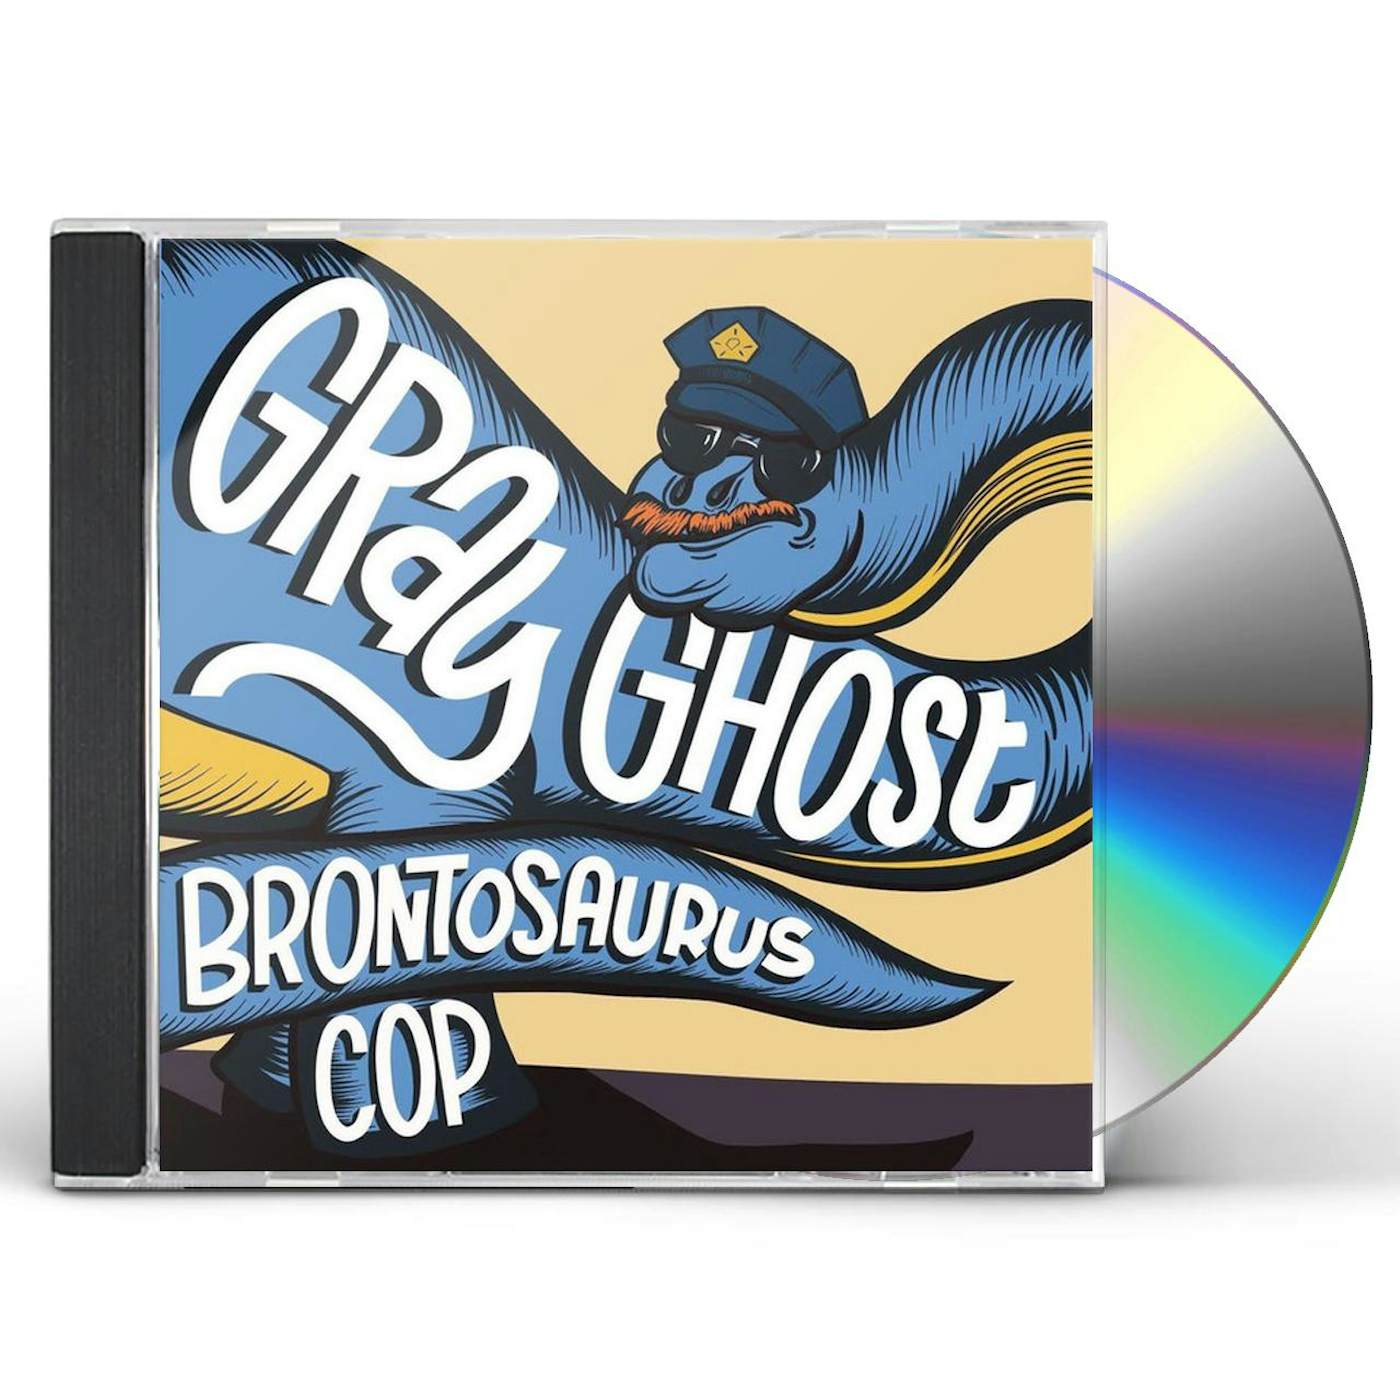 Gray Ghost BRONTOSAURUS COP CD